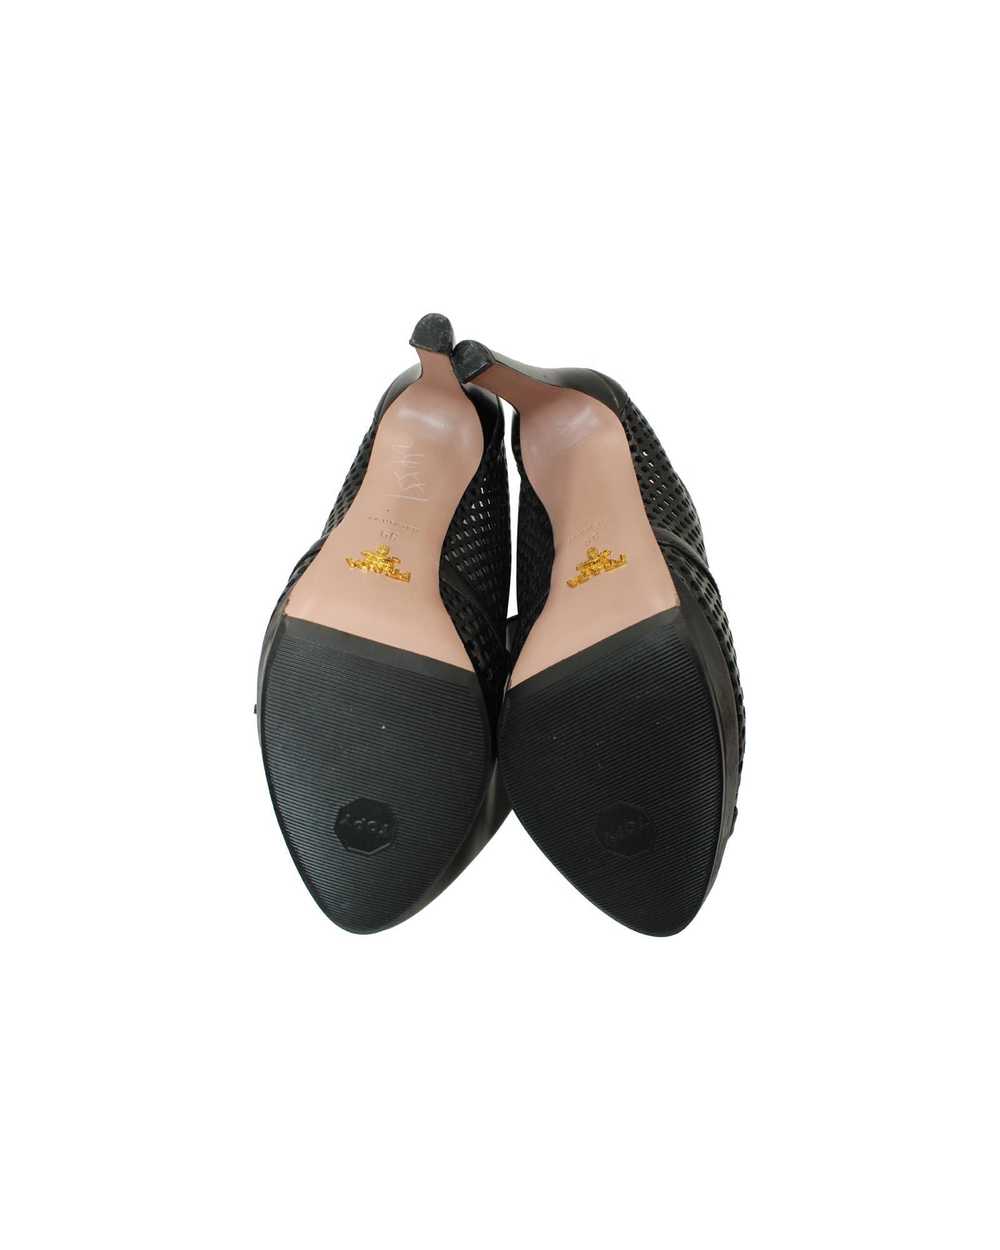 Prada Perforated Black Leather Platform Sandals - image 6